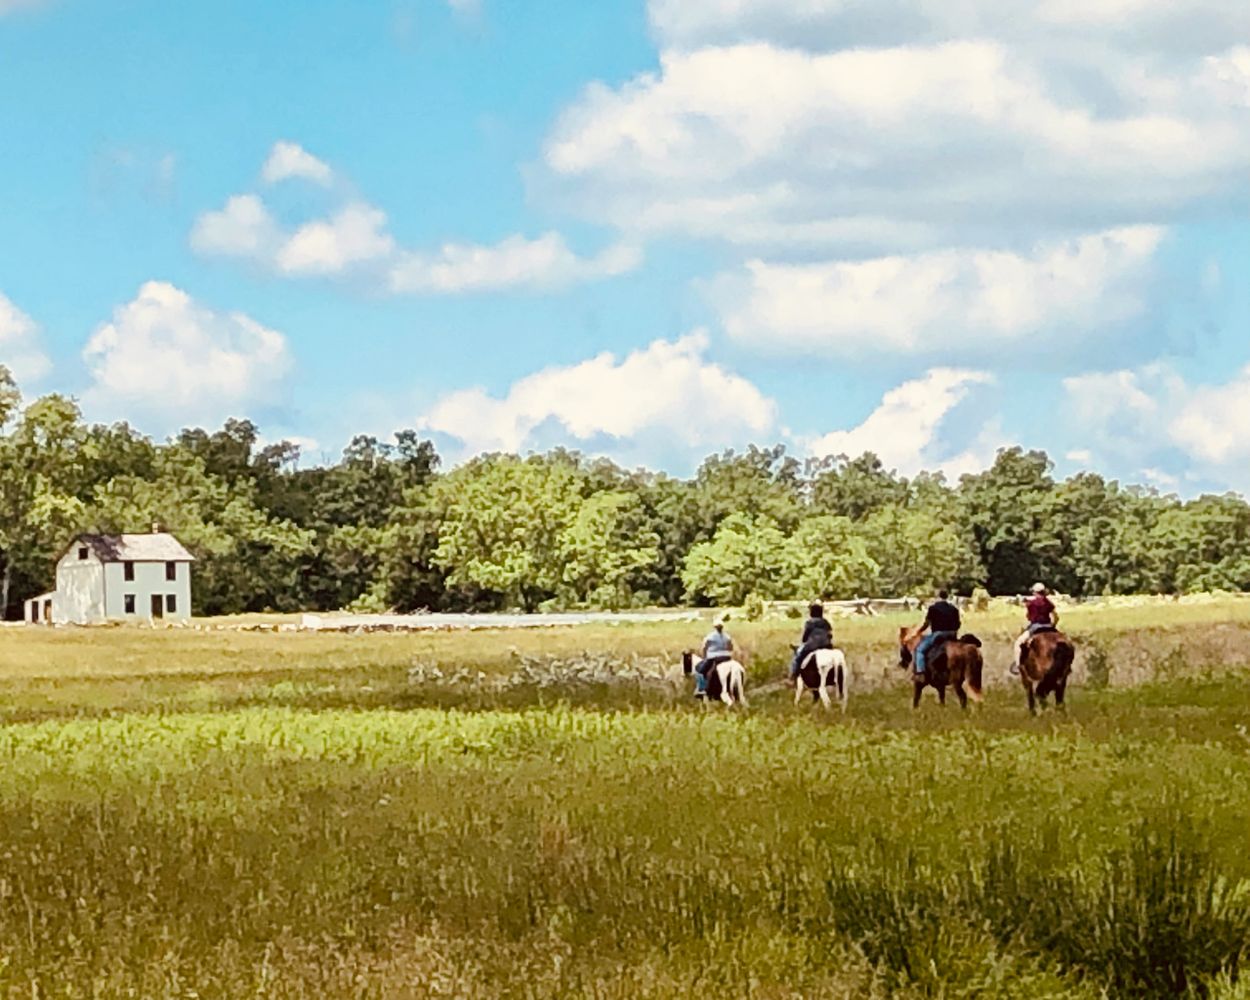 horseback riding tours pennsylvania